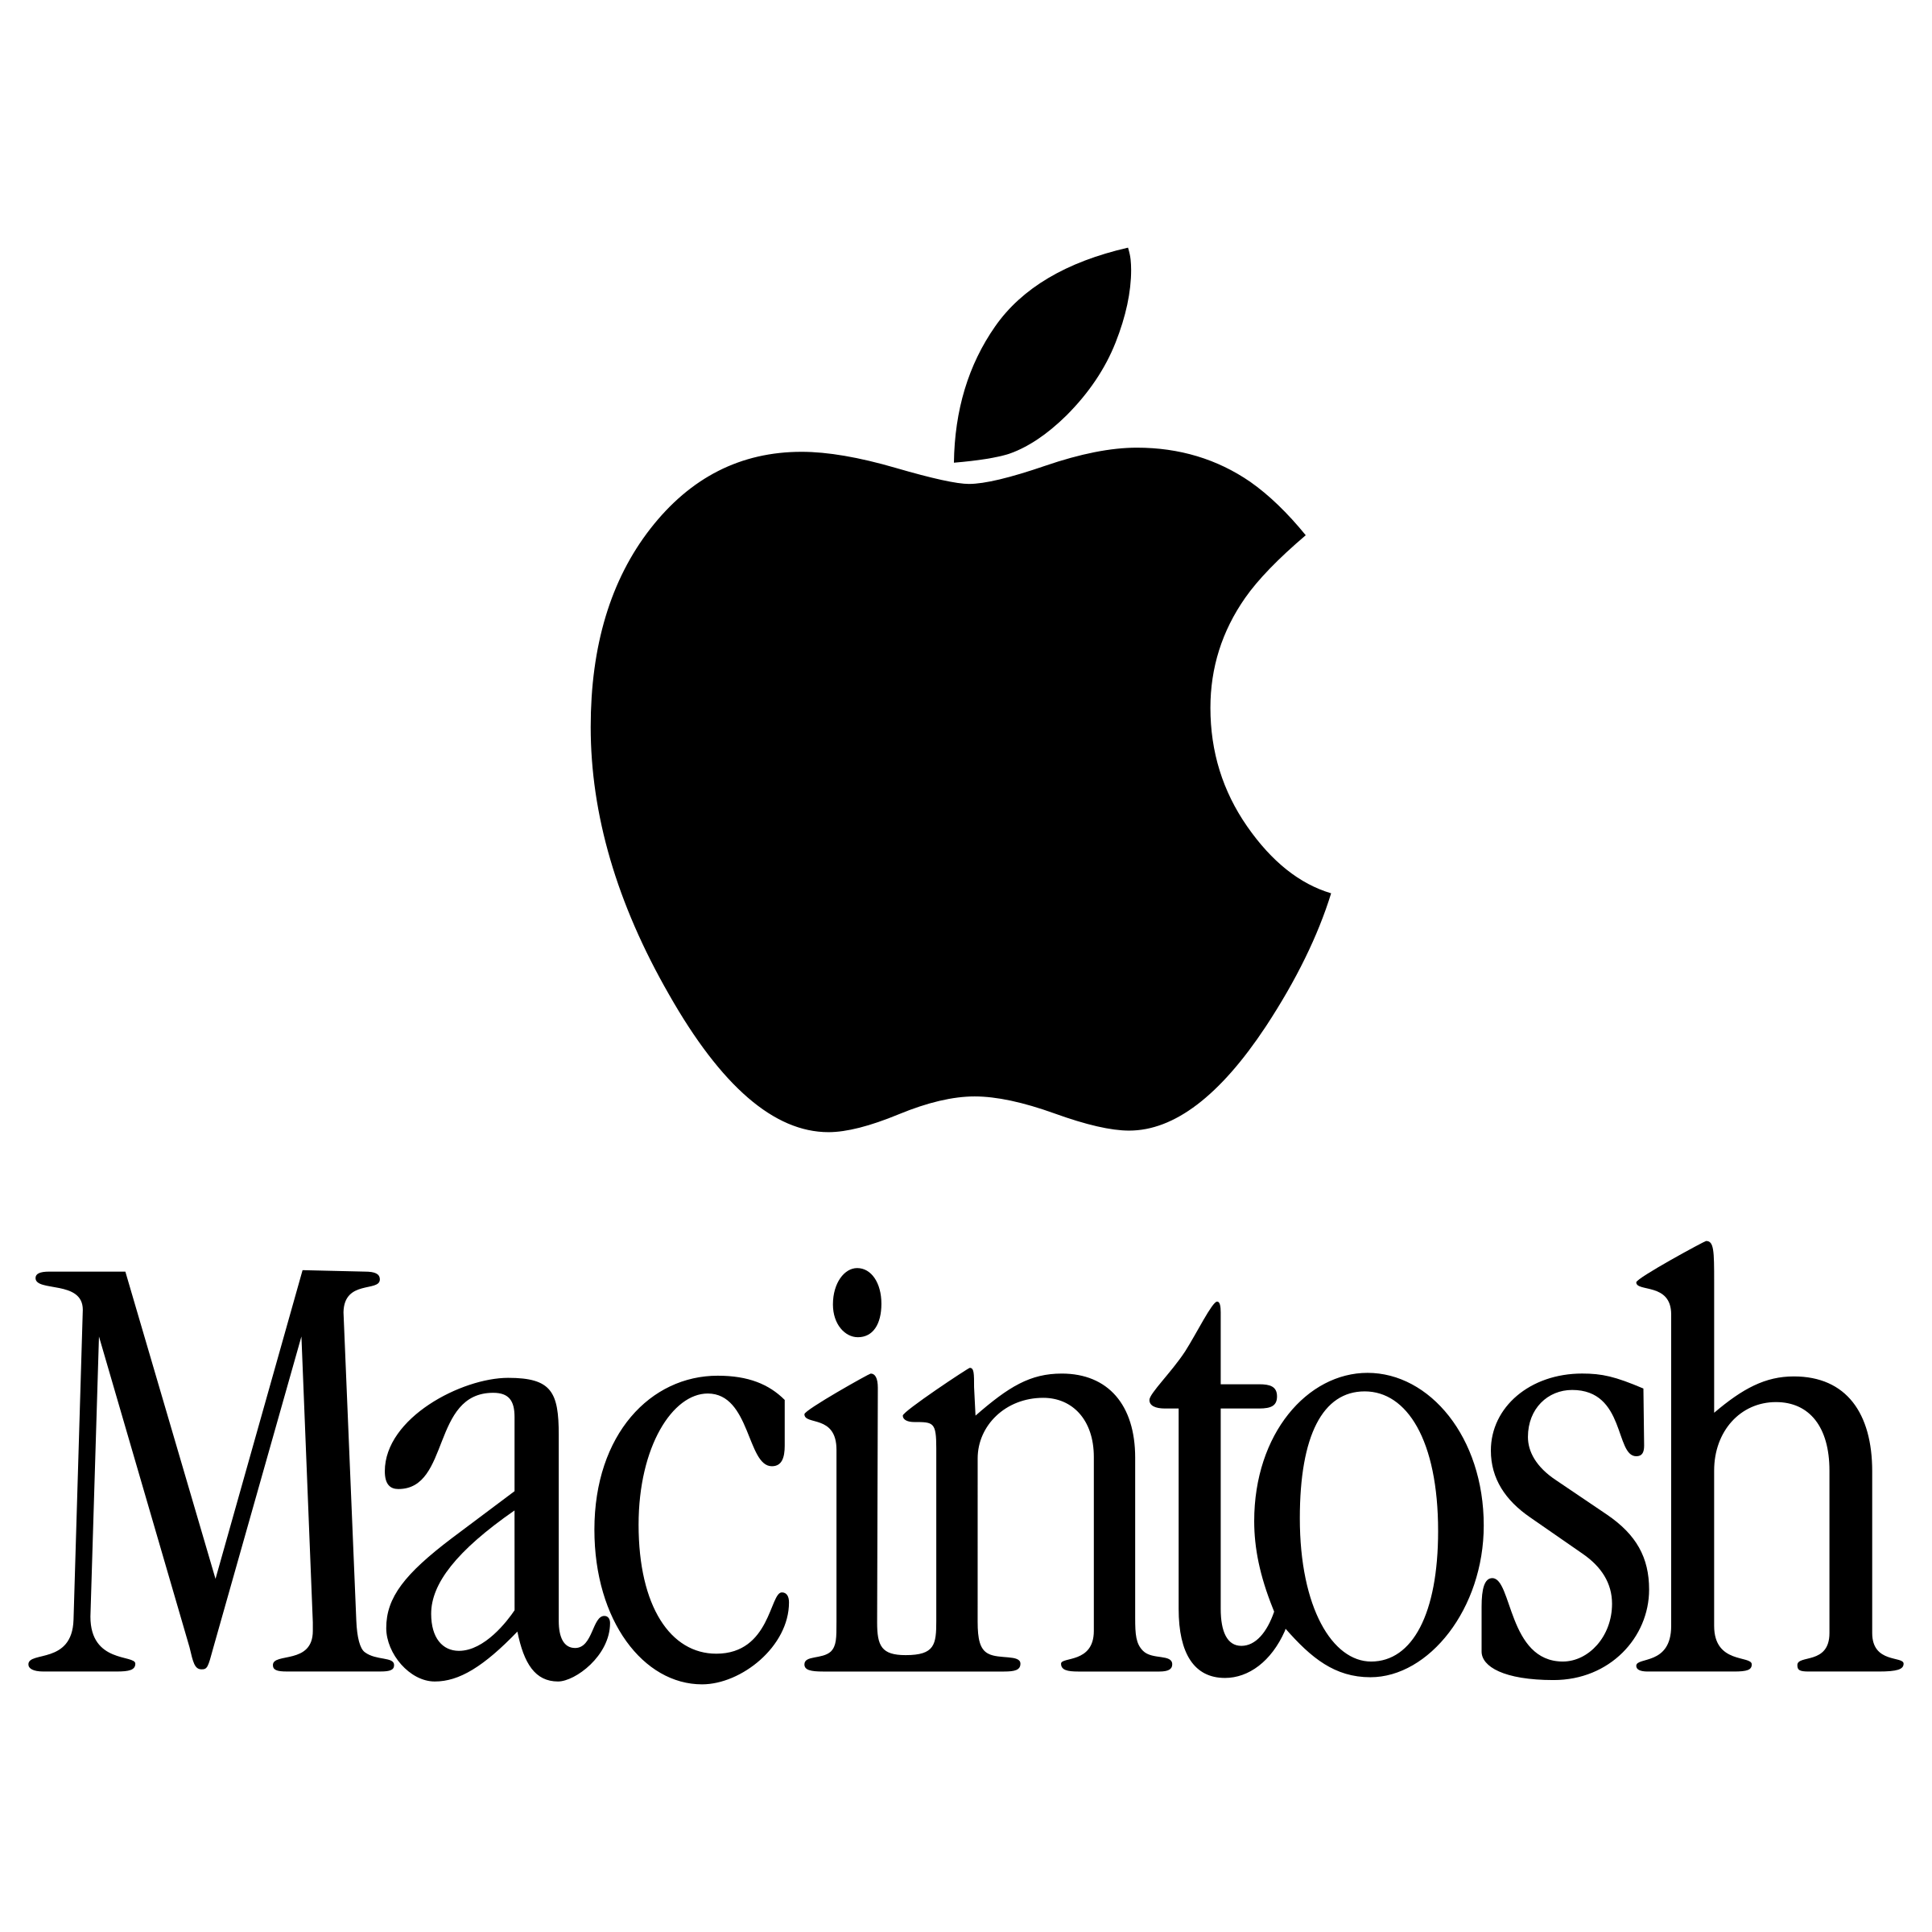 Macintosh Logo - Macintosh Logo PNG Transparent & SVG Vector - Freebie Supply